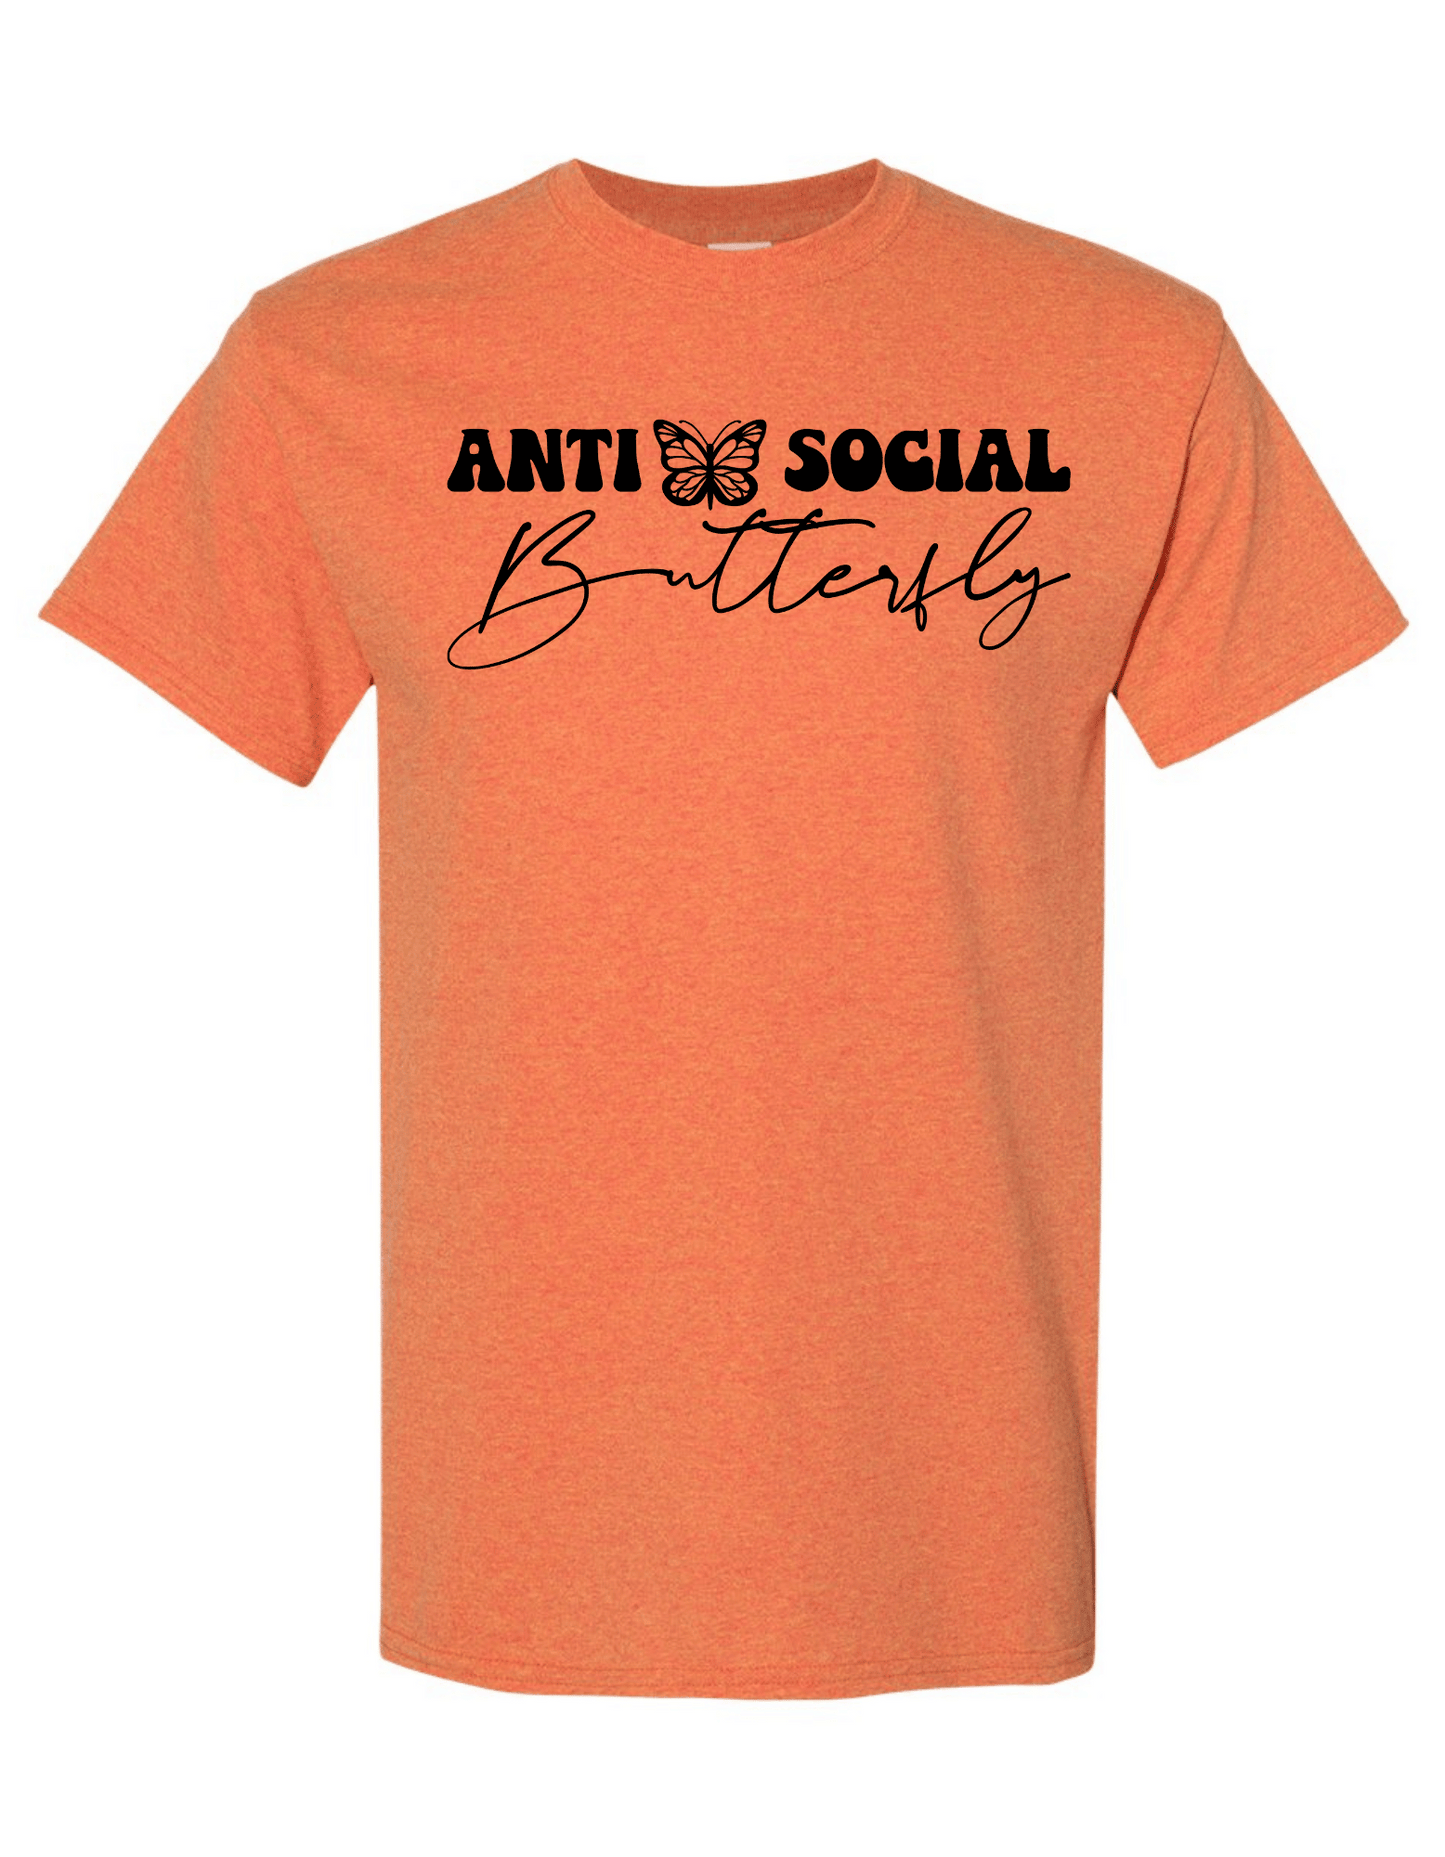 Made to Order Handmade Anti Social Butterfly Short Sleeve Shirt